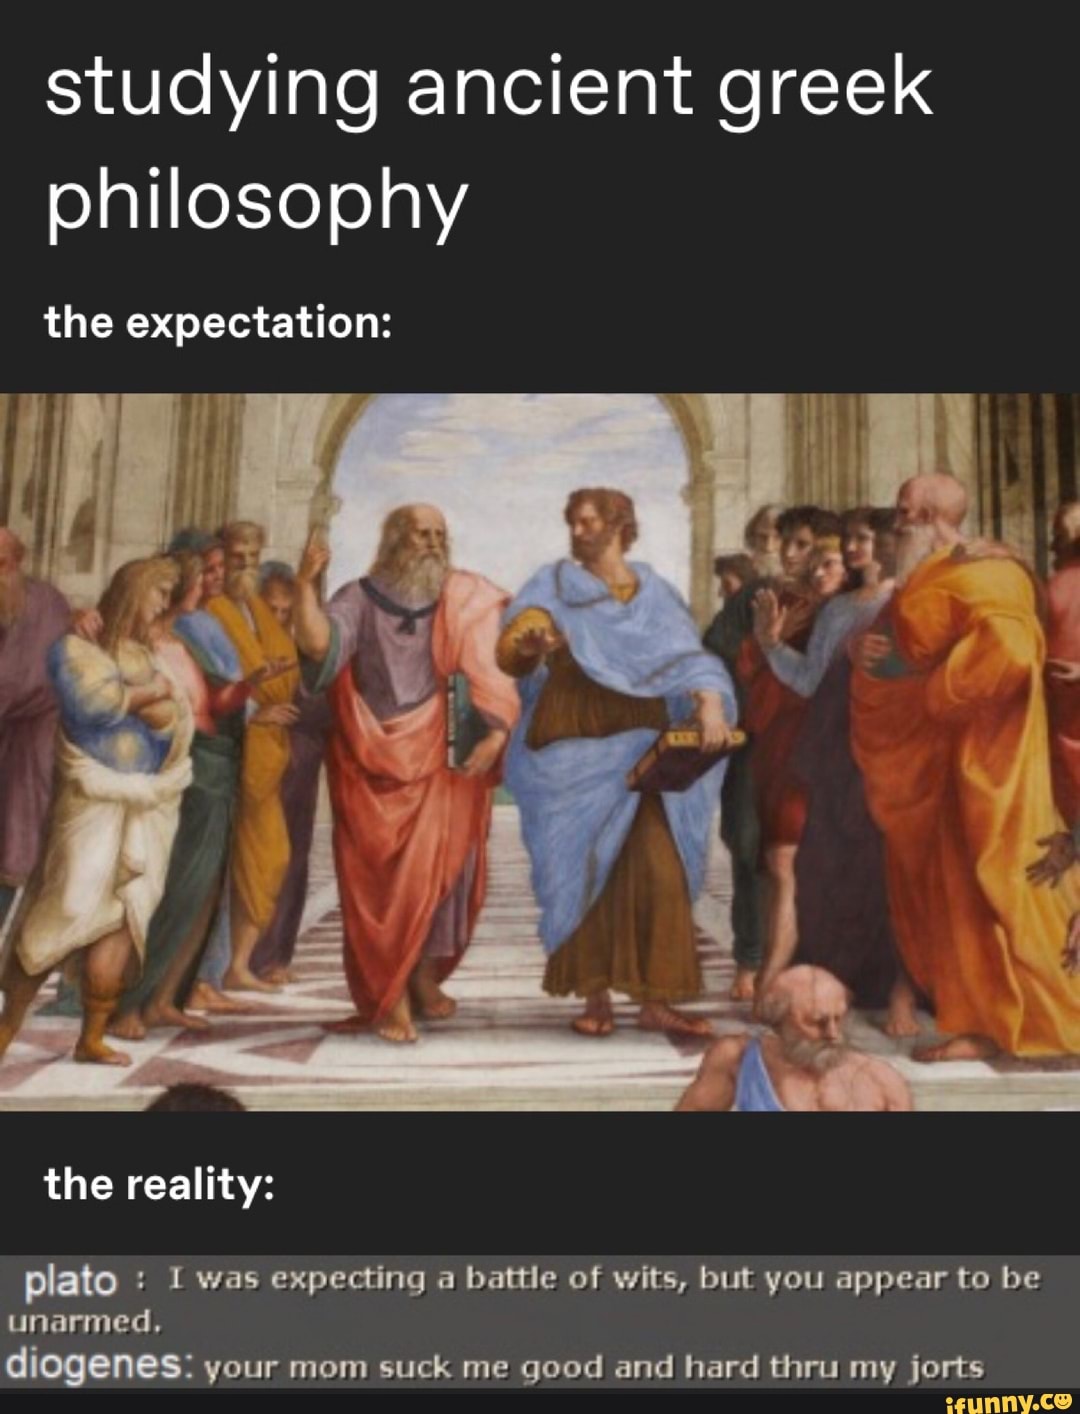 diogenes philosophy